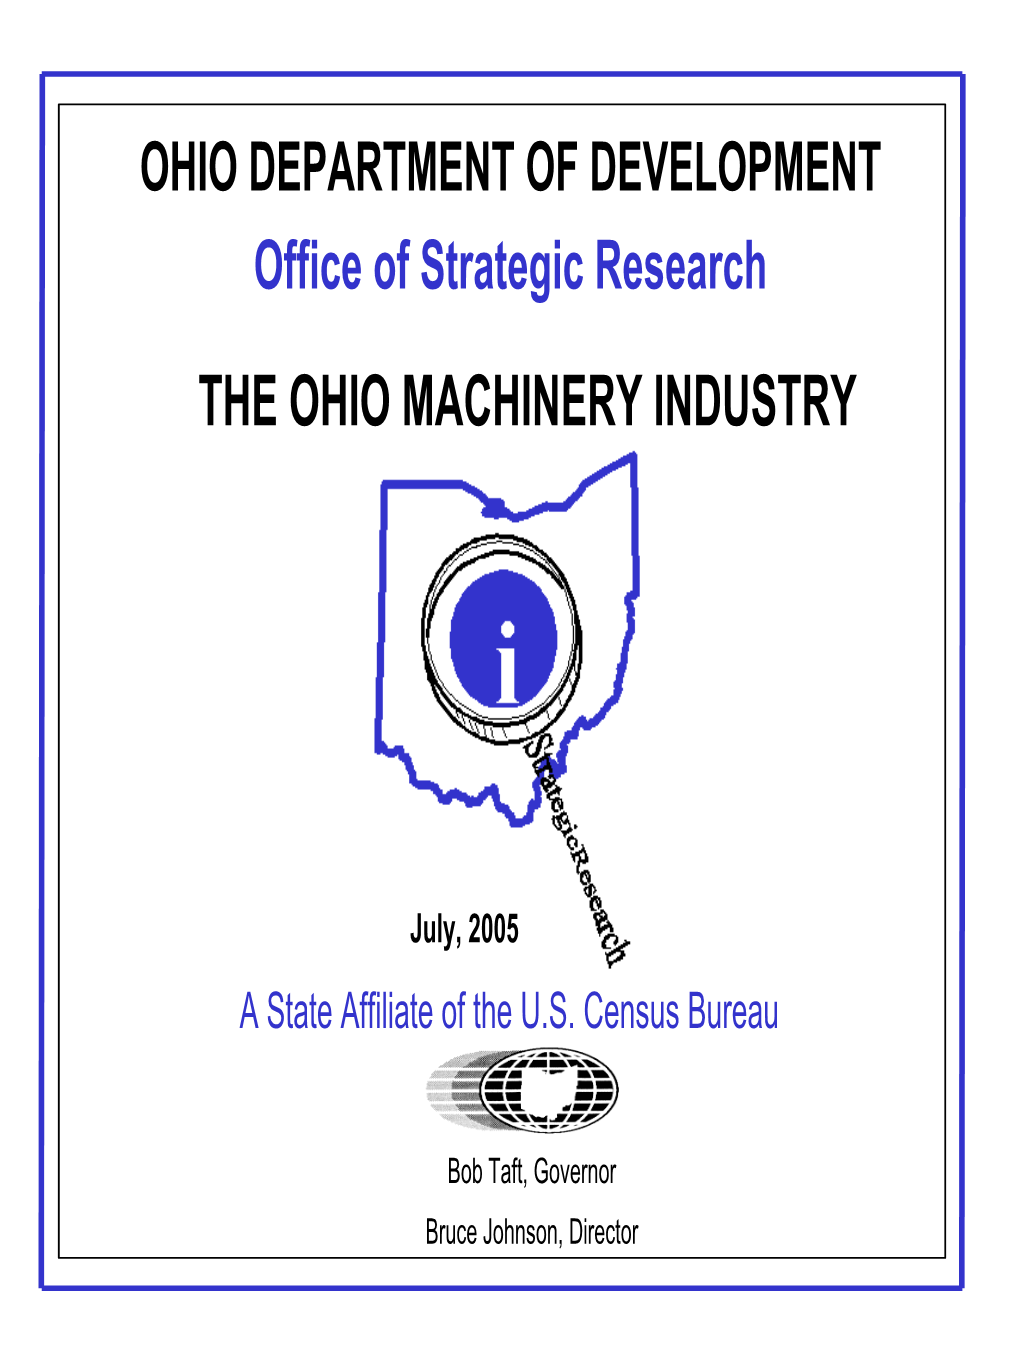 The Ohio Machinery Industry